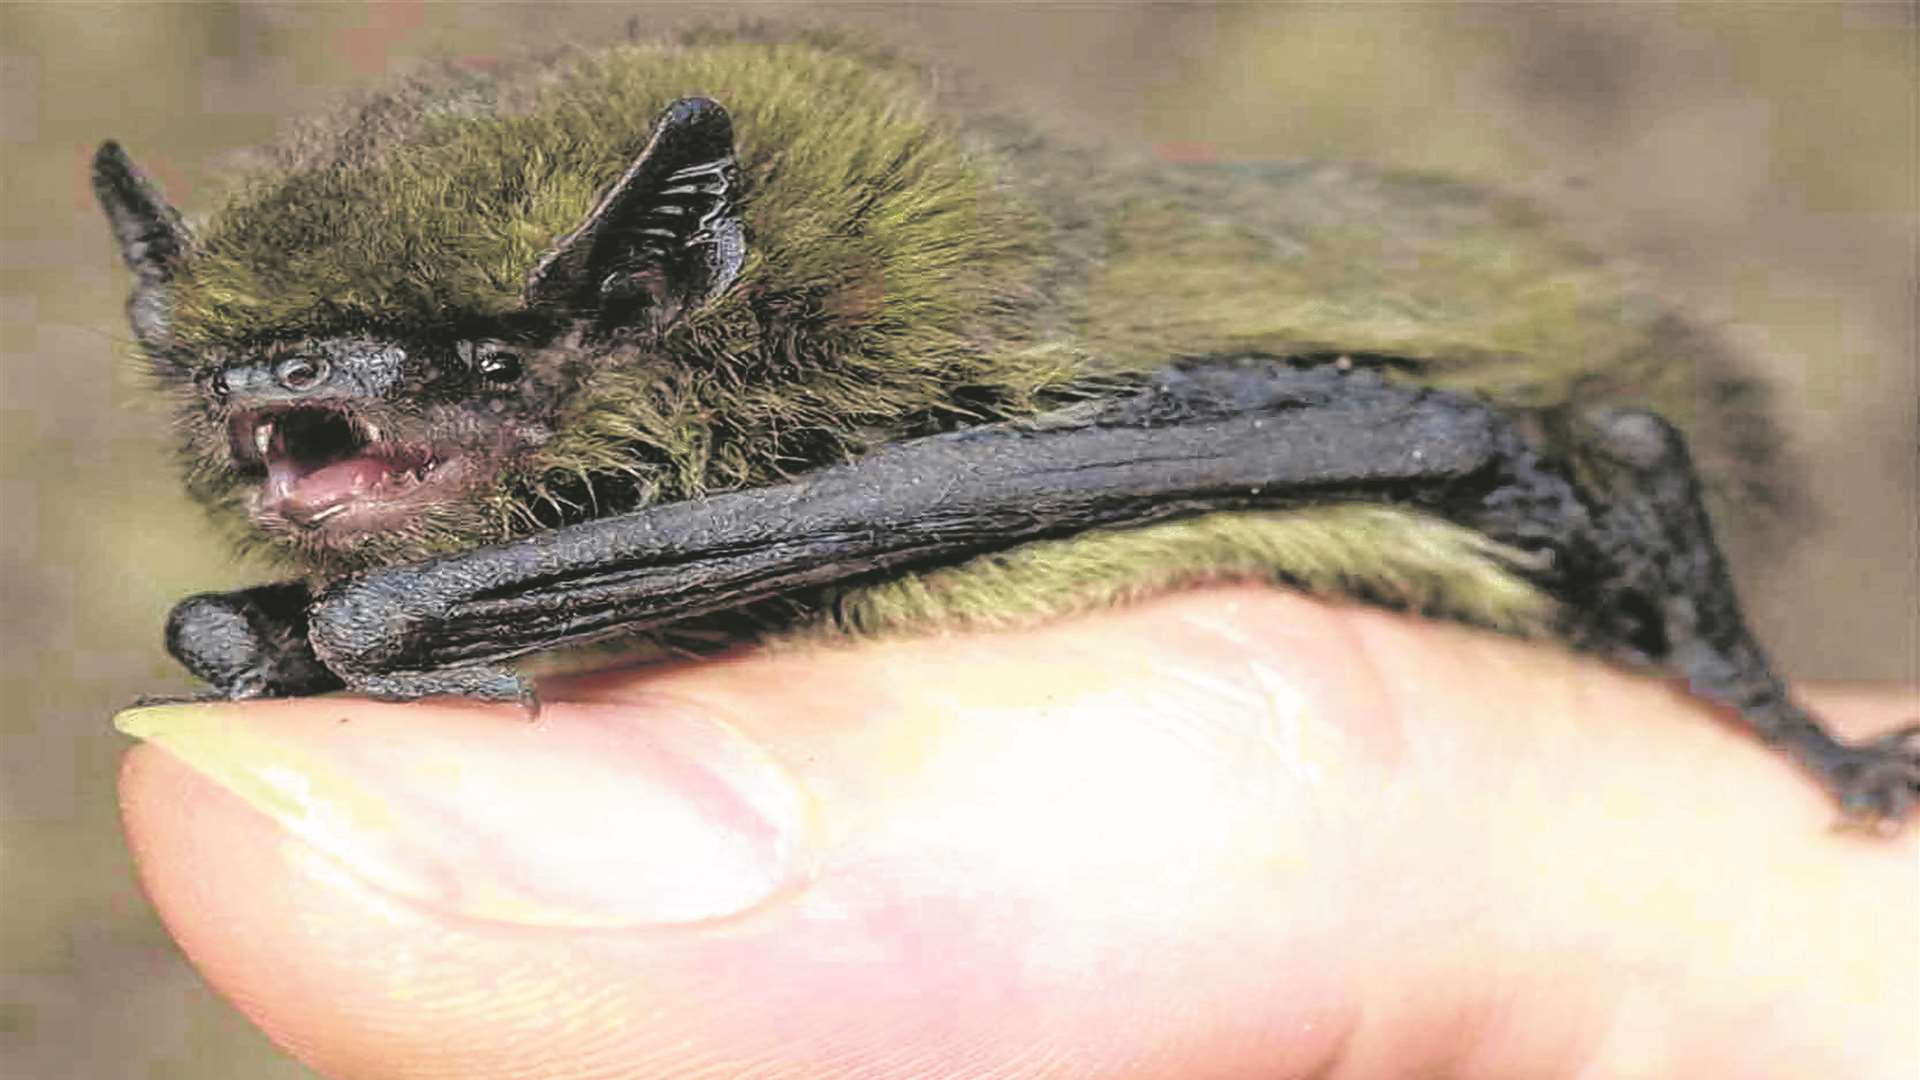 A pipistrelle bat